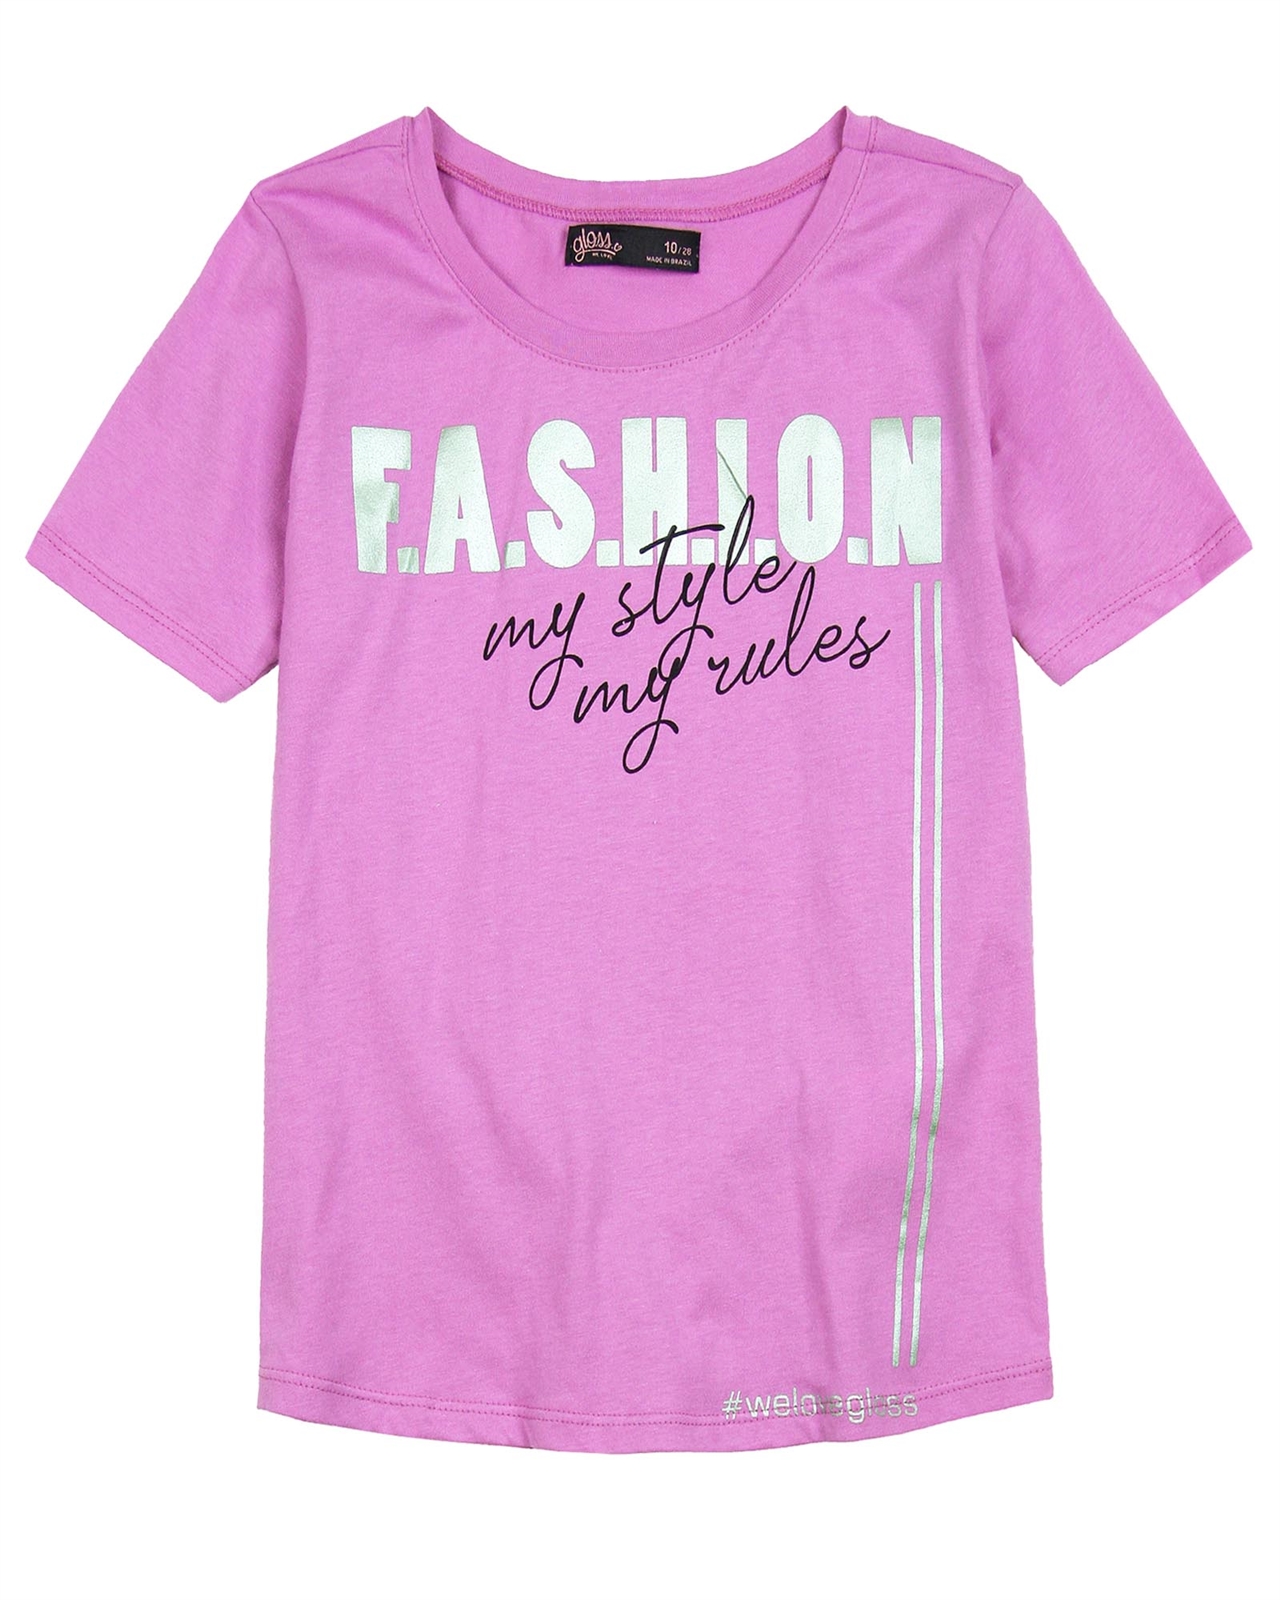 Gloss Junior Girls Fashion Style T-shirt - Gloss - Gloss Junior Girls ...